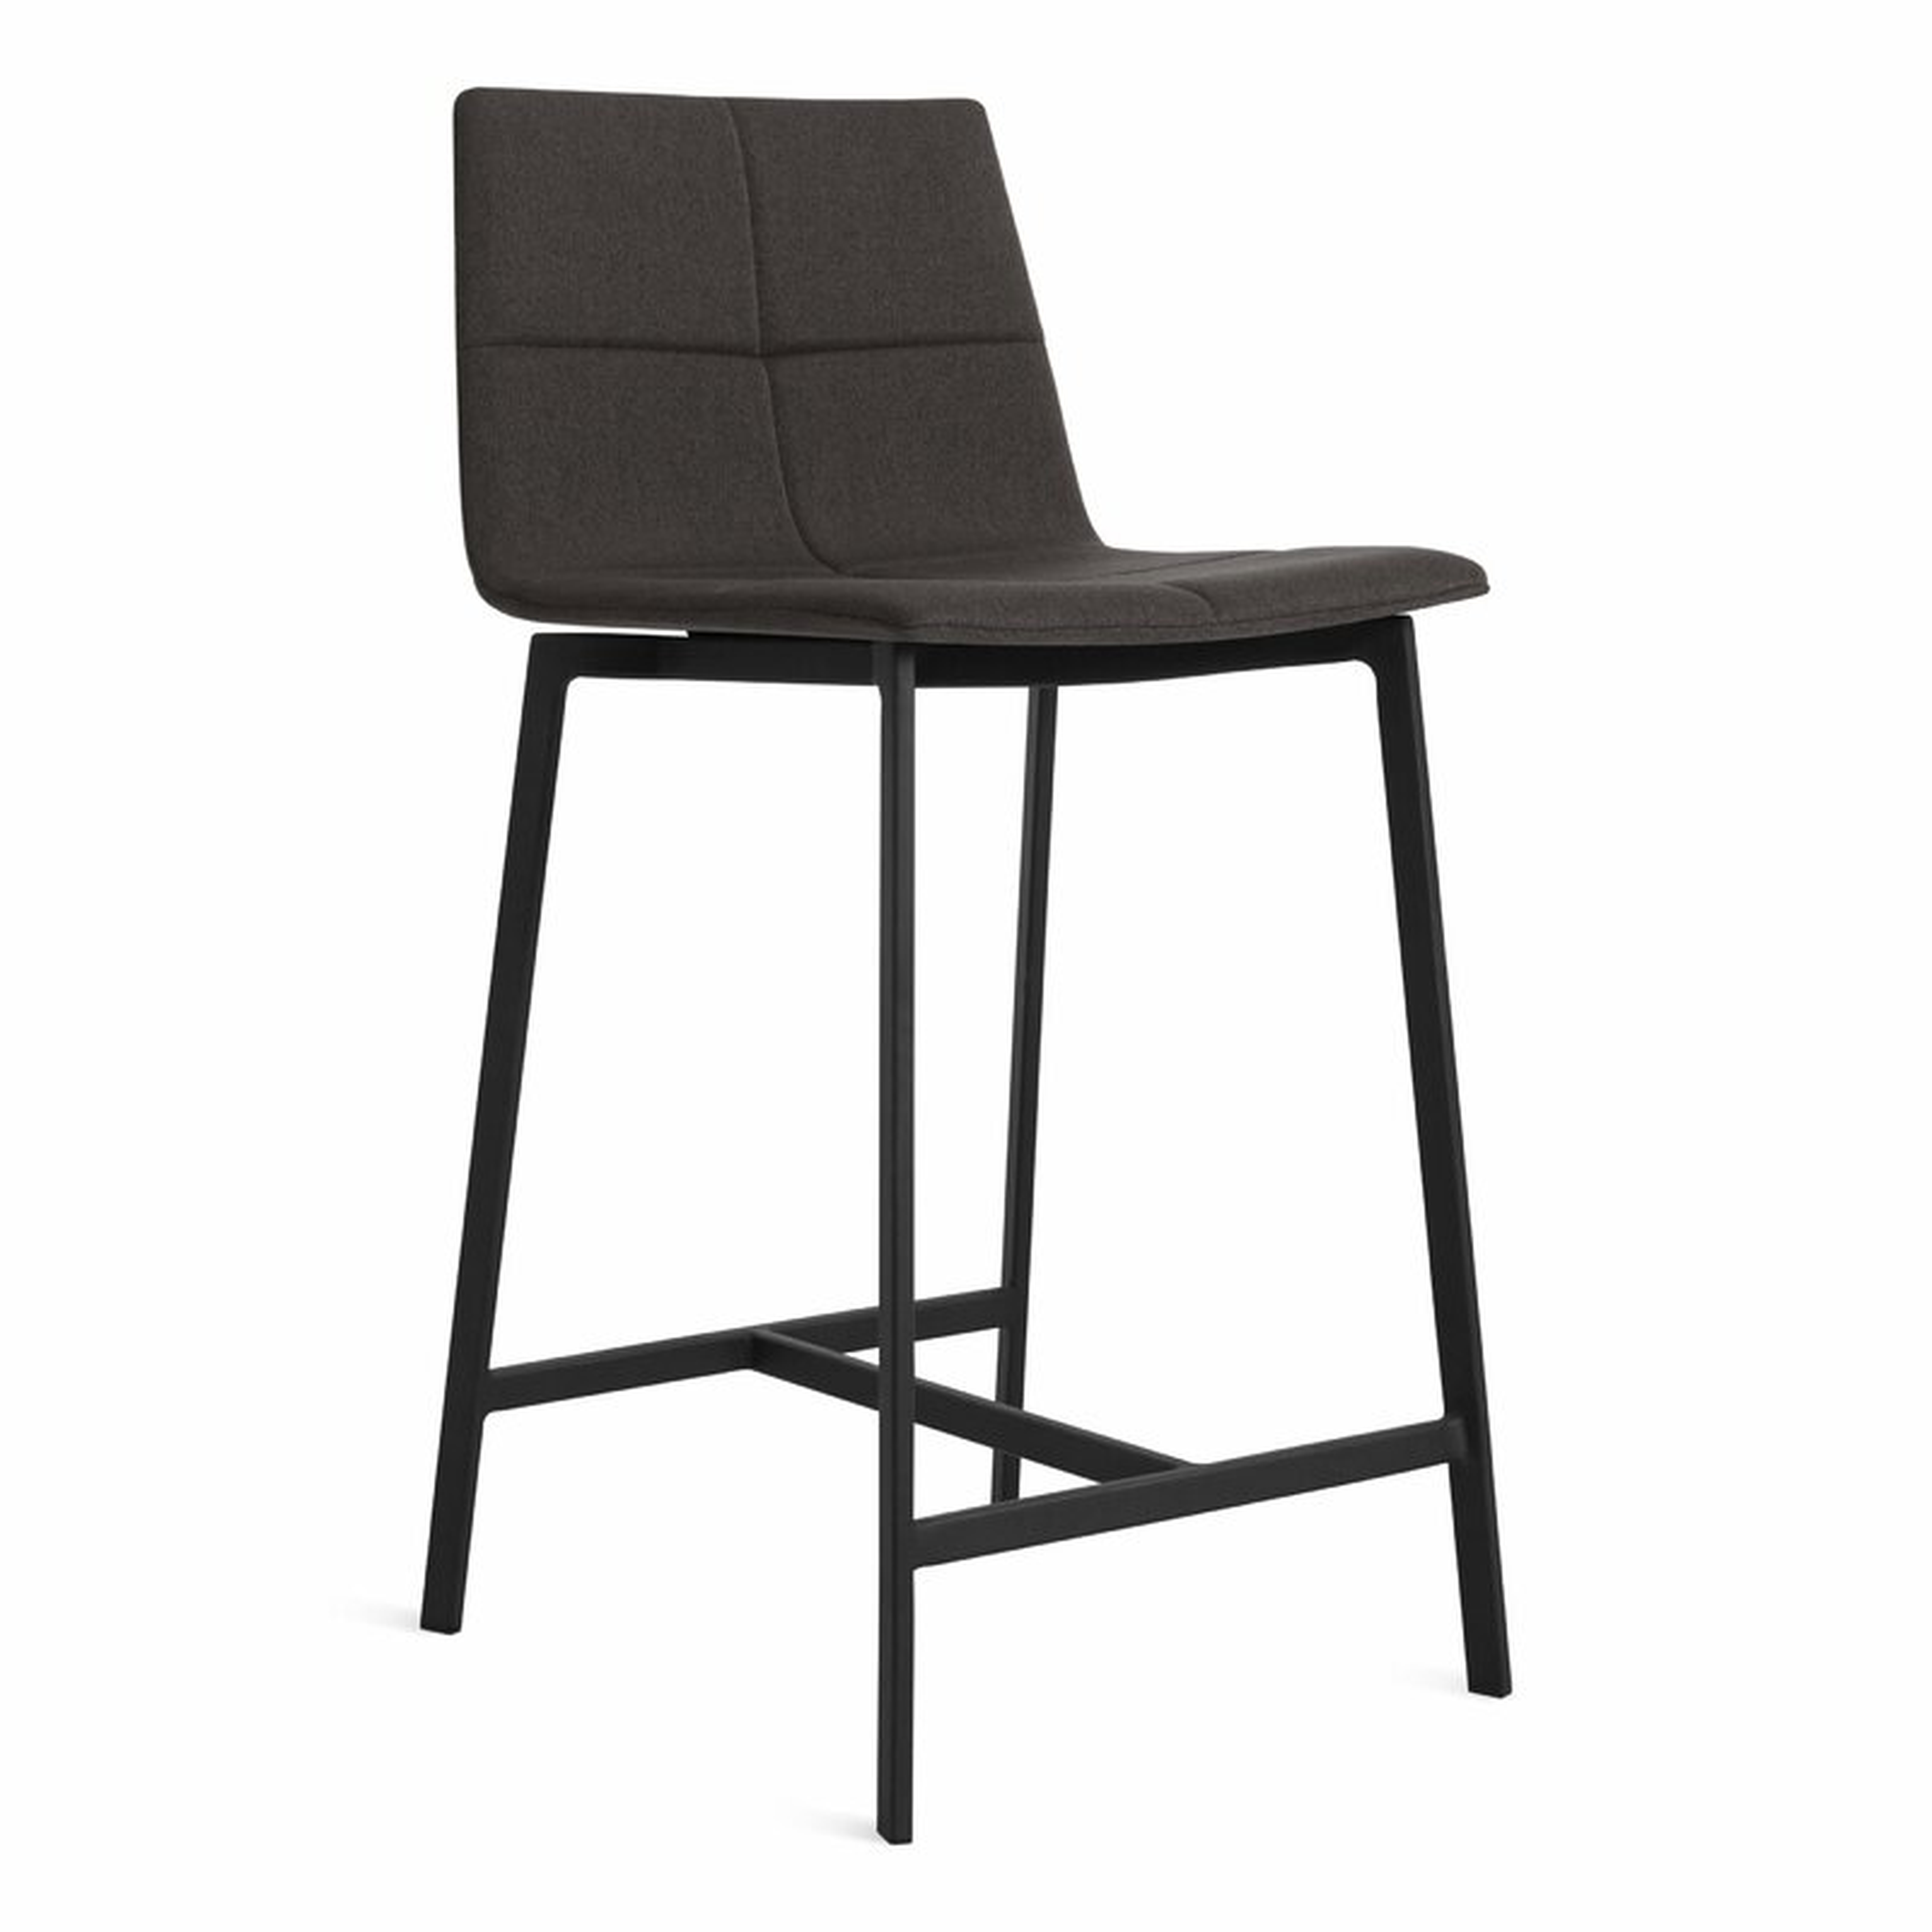 Blu Dot Between Us Bar & Counter Stool Seat Height: Counter Stool (26" Seat Height), Color: Black, Upholstery: Gunmetal - Perigold